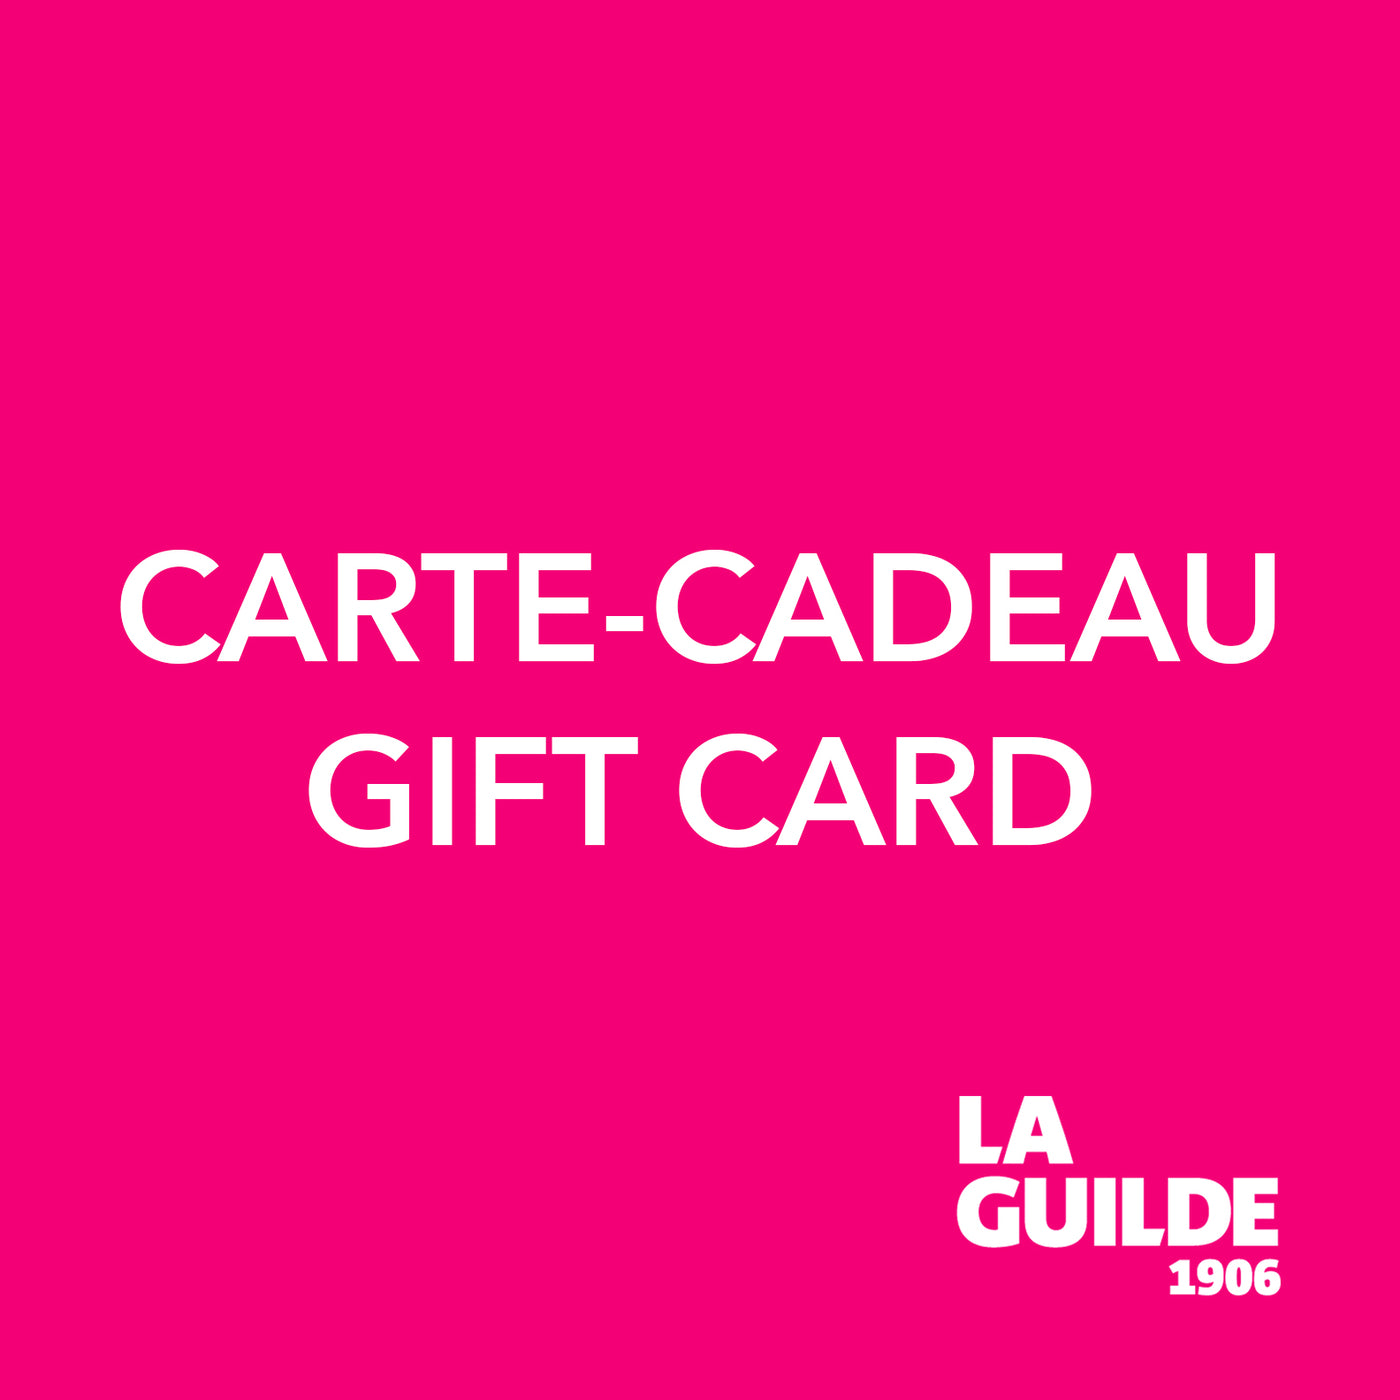 Carte-cadeau | Gift Card - La Guilde